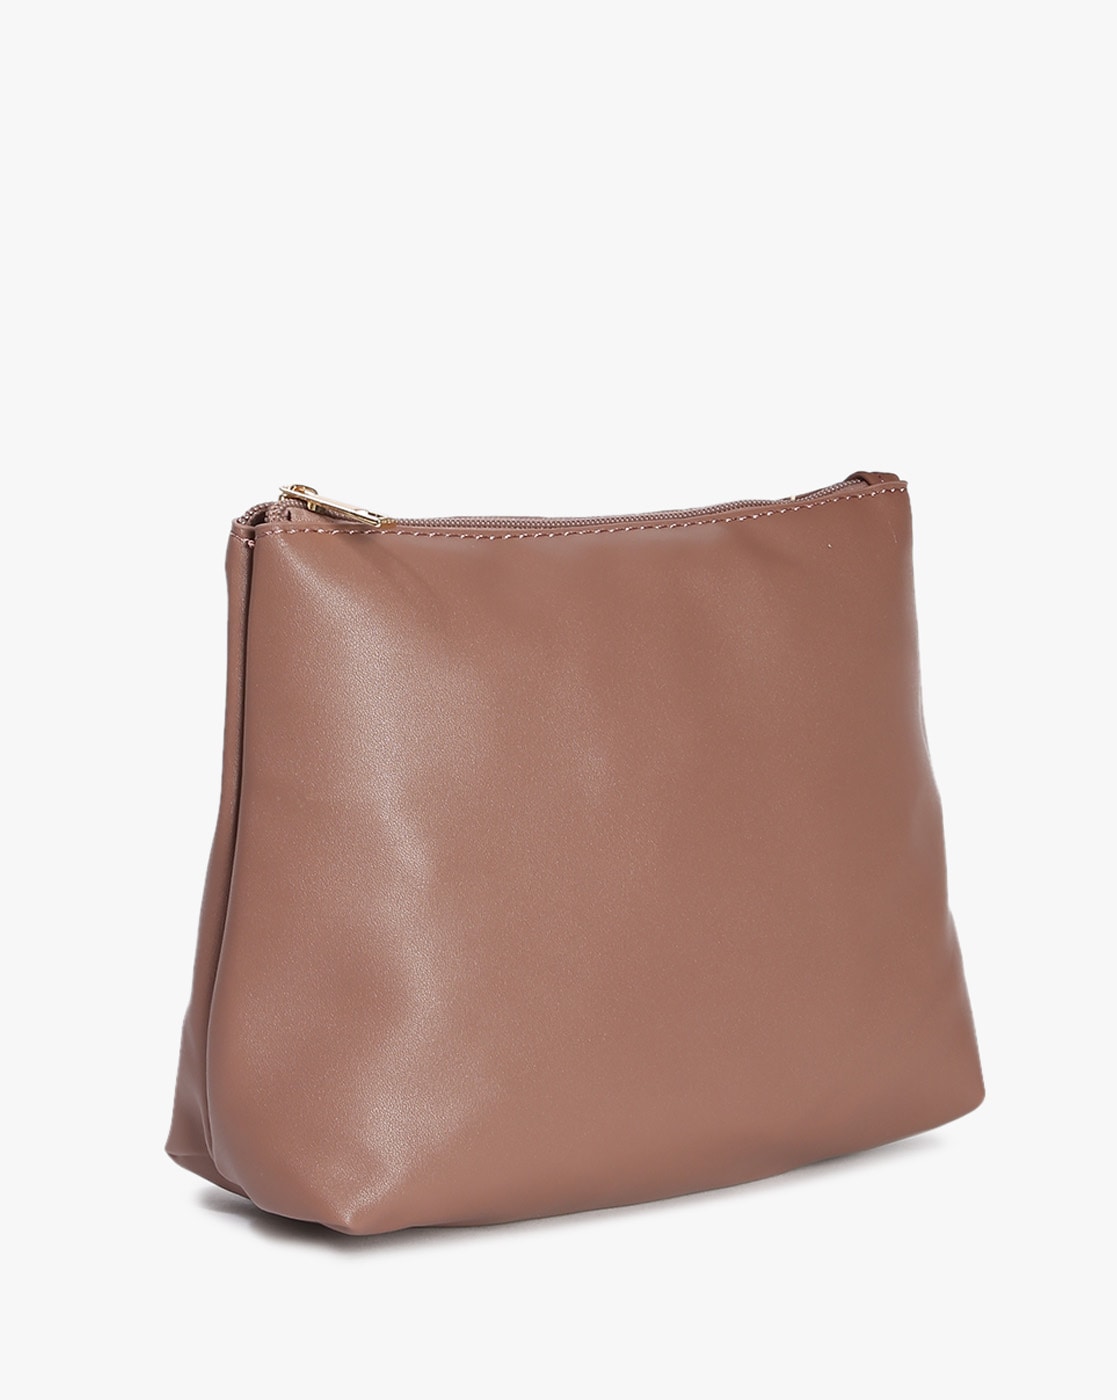 Kate Spade Purse Handbag Brown Color | Trendy purses, Kate spade handbags,  Bags